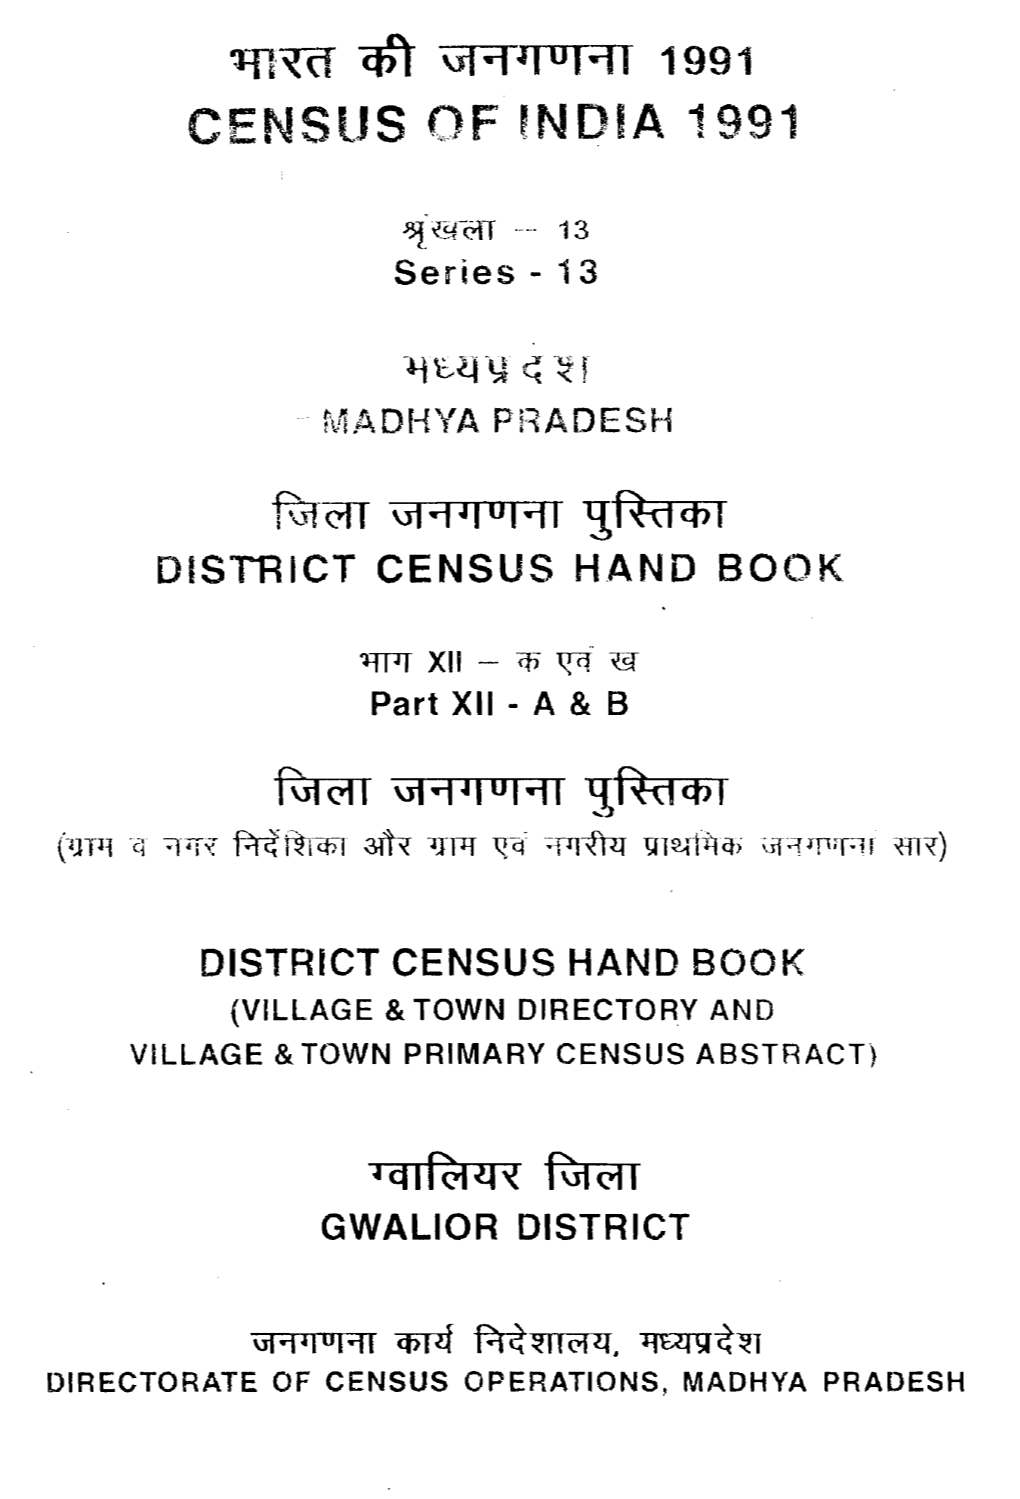 District Census Handbook, Gwalior, Part XII-A & B, Series-13